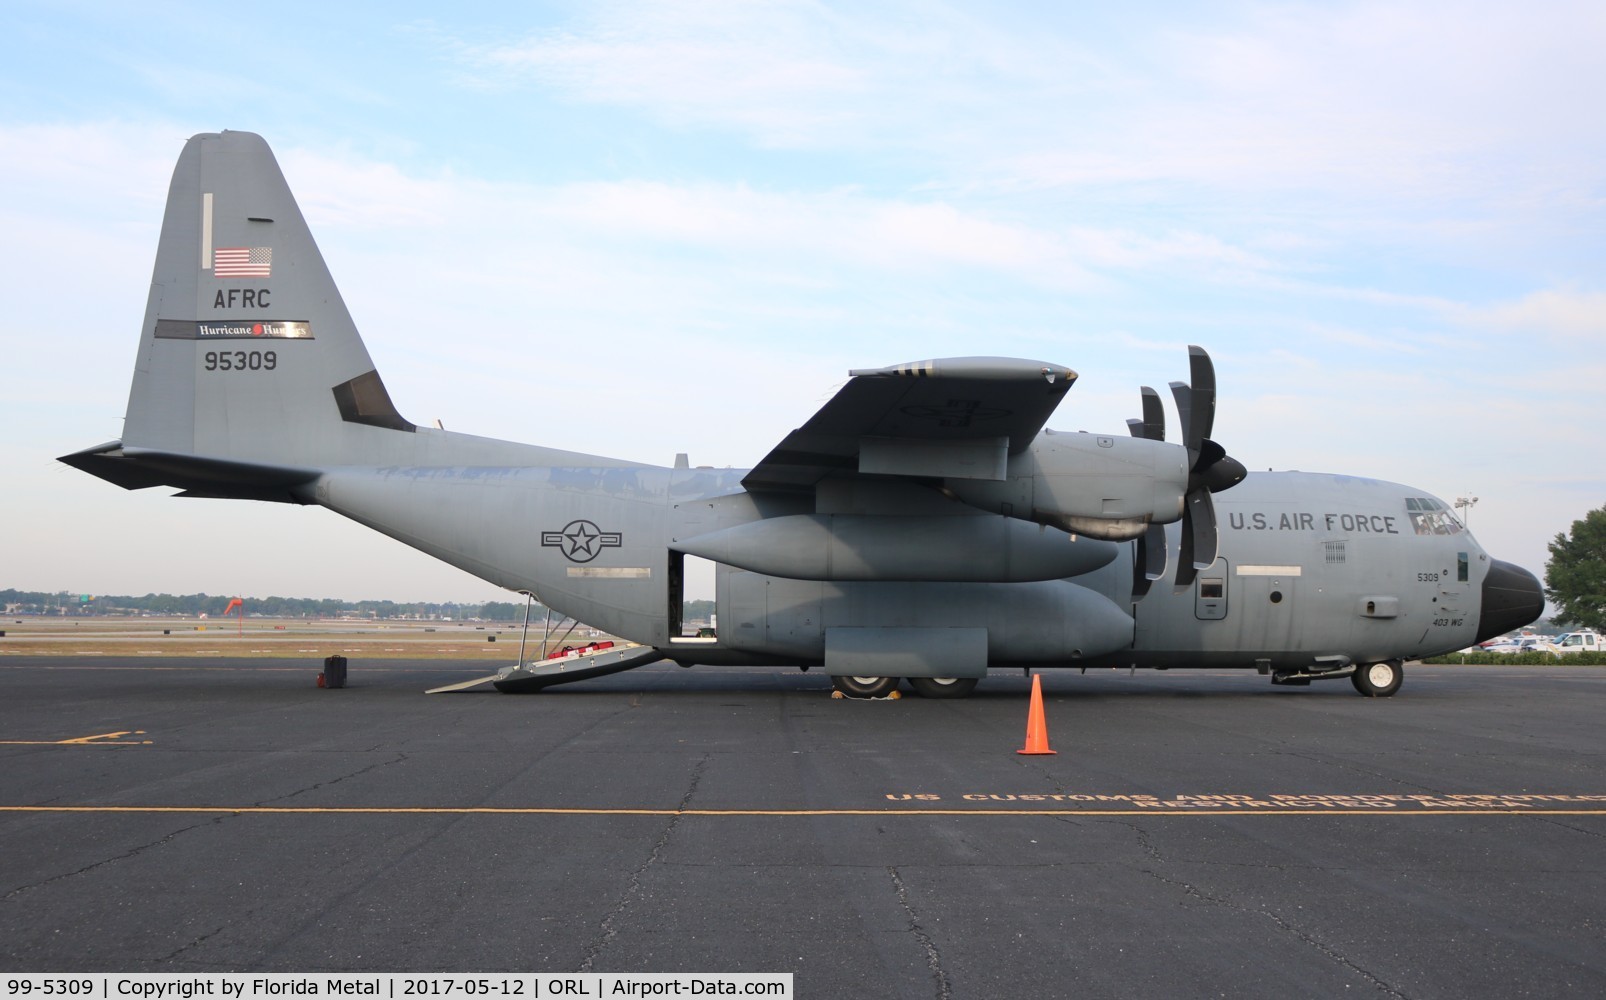 99-5309, 1999 Lockheed WC-130J Hercules C/N 382-5501, WC-130J